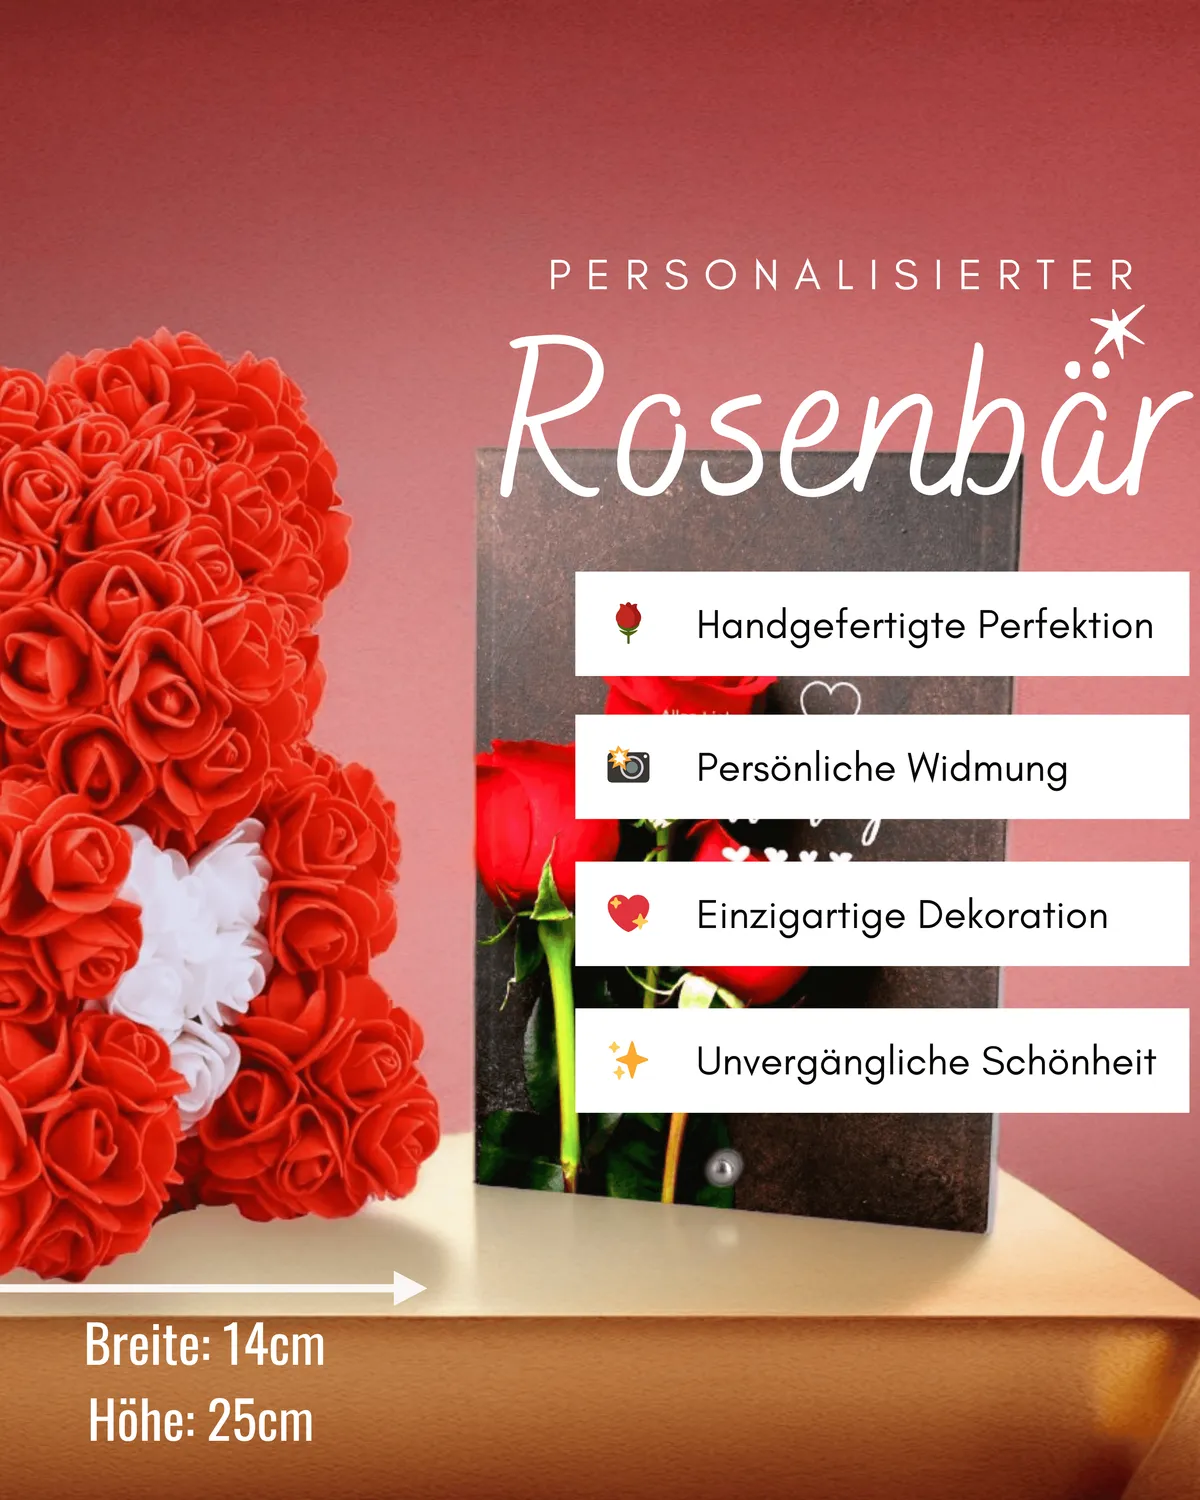 Personalisierter Rosenbär mit Fotoaufsteller